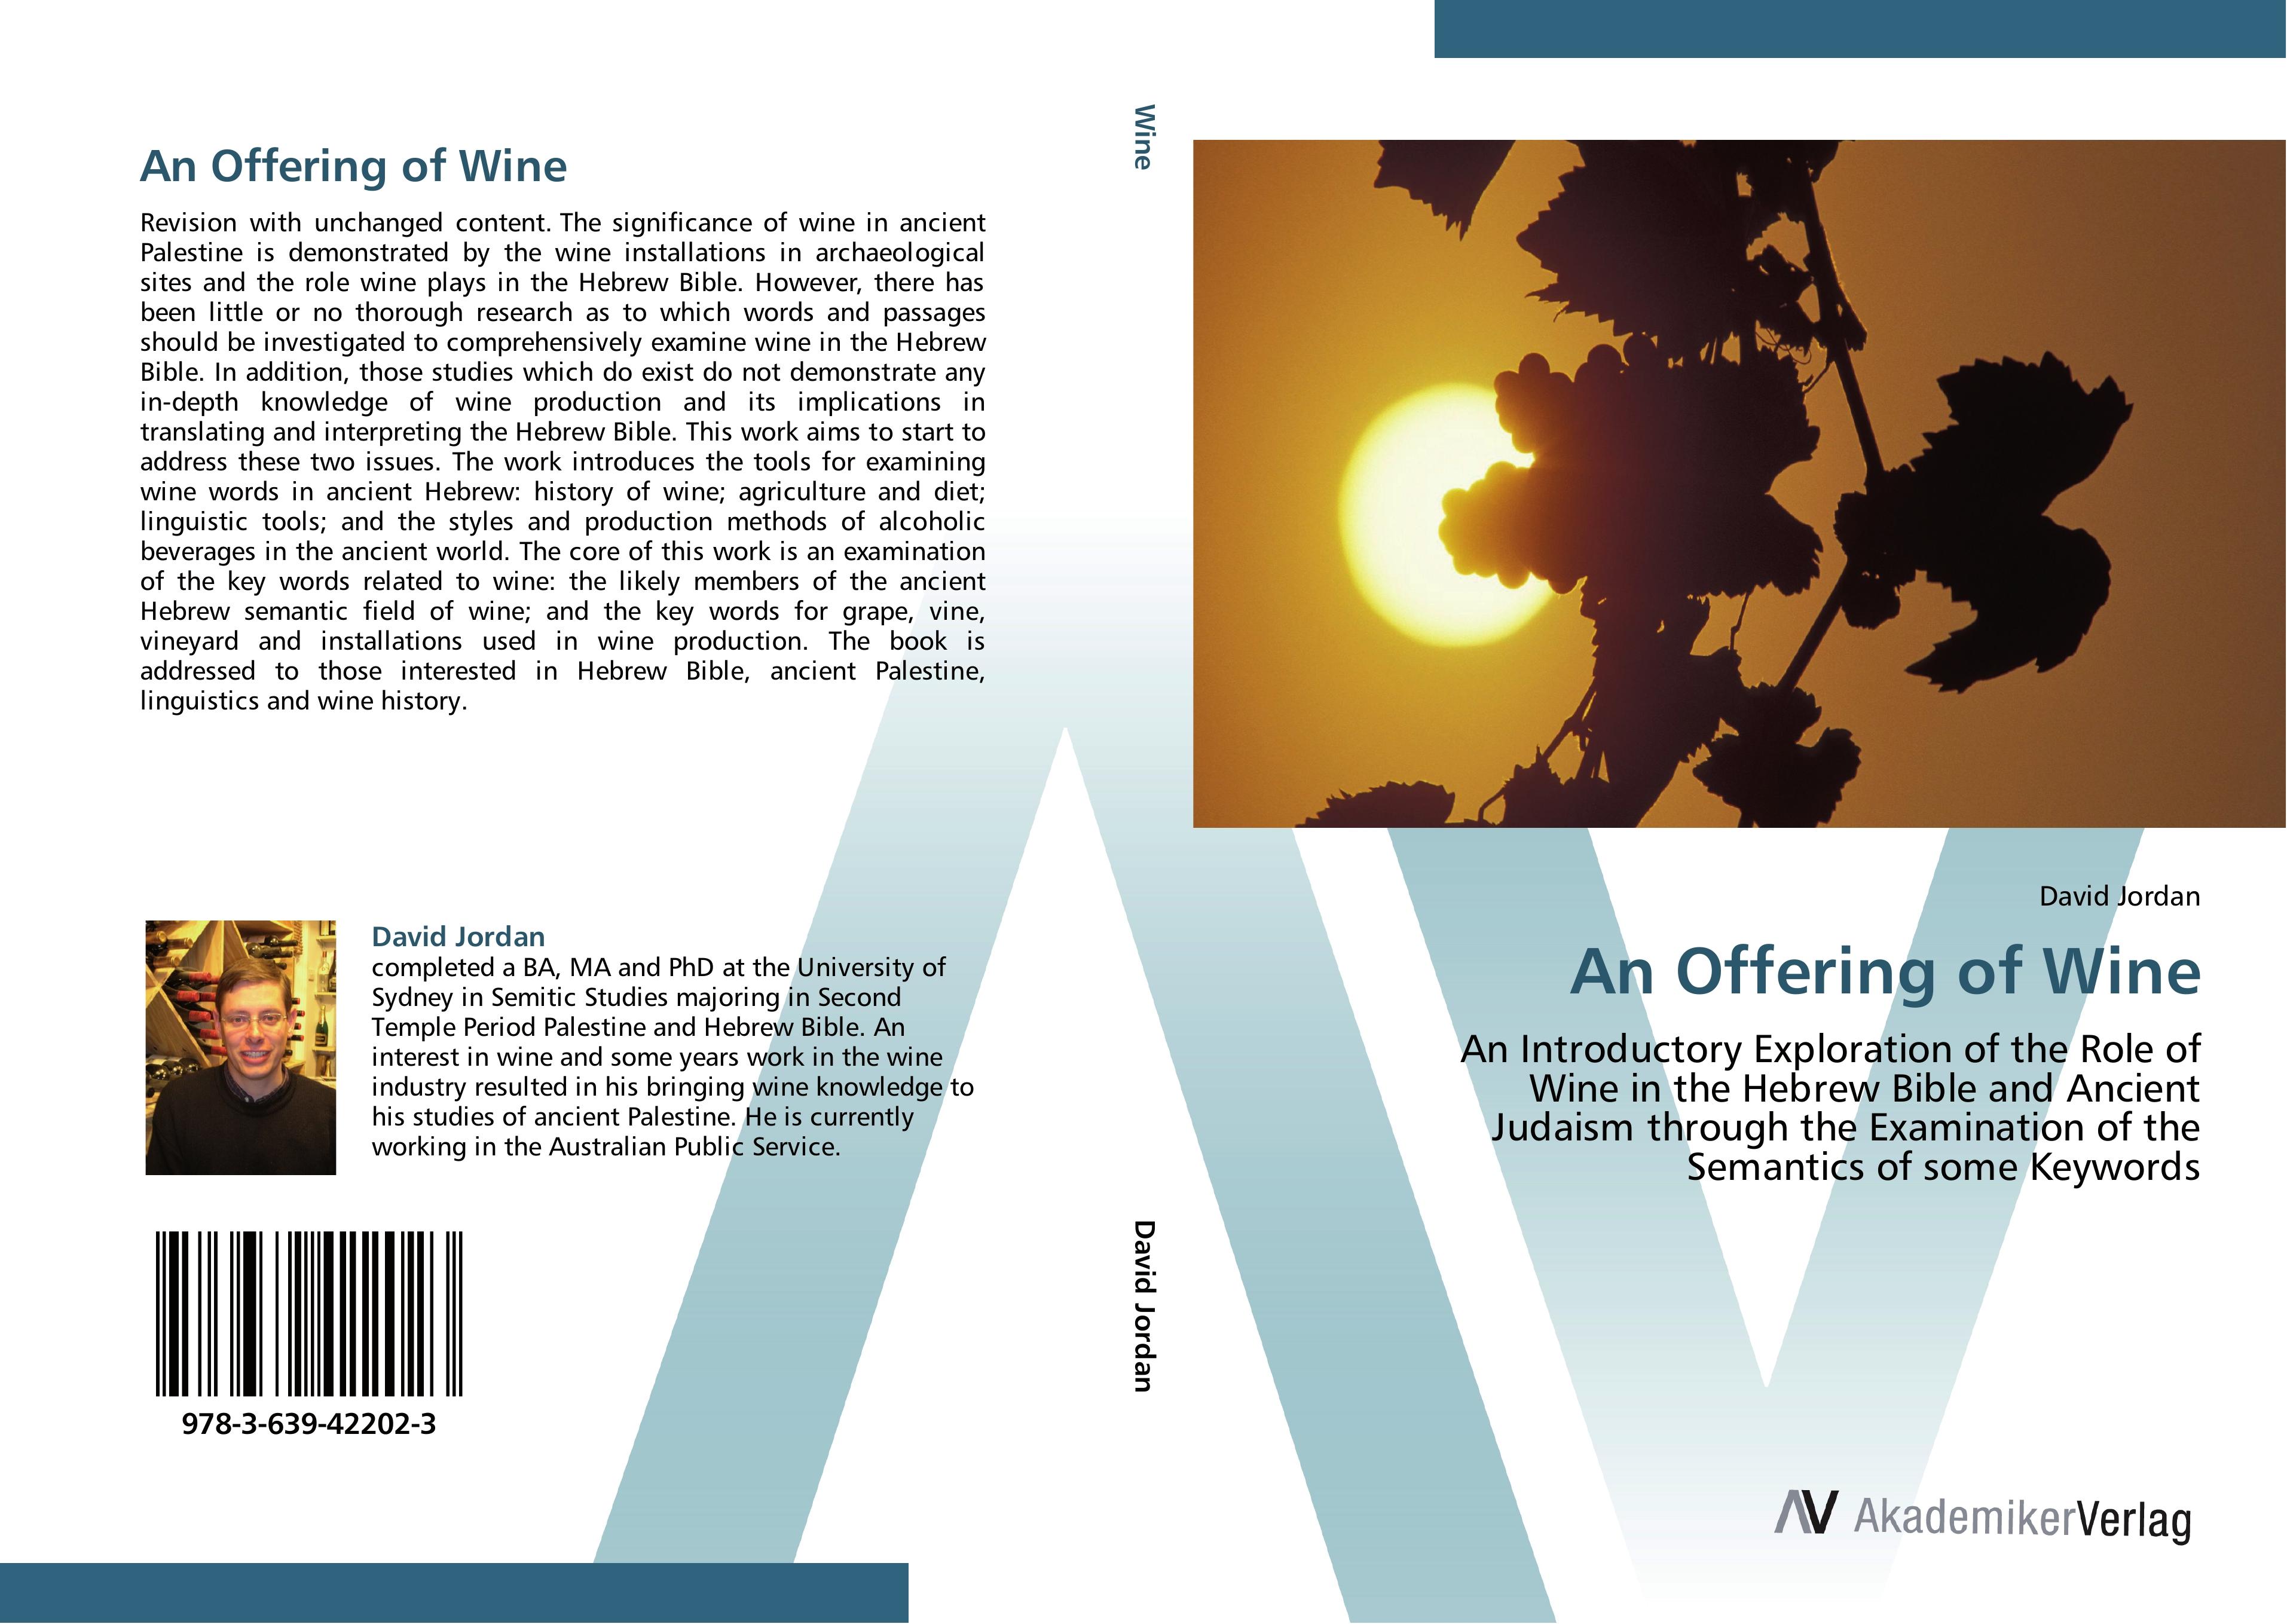 An Offering of Wine - David Jordan